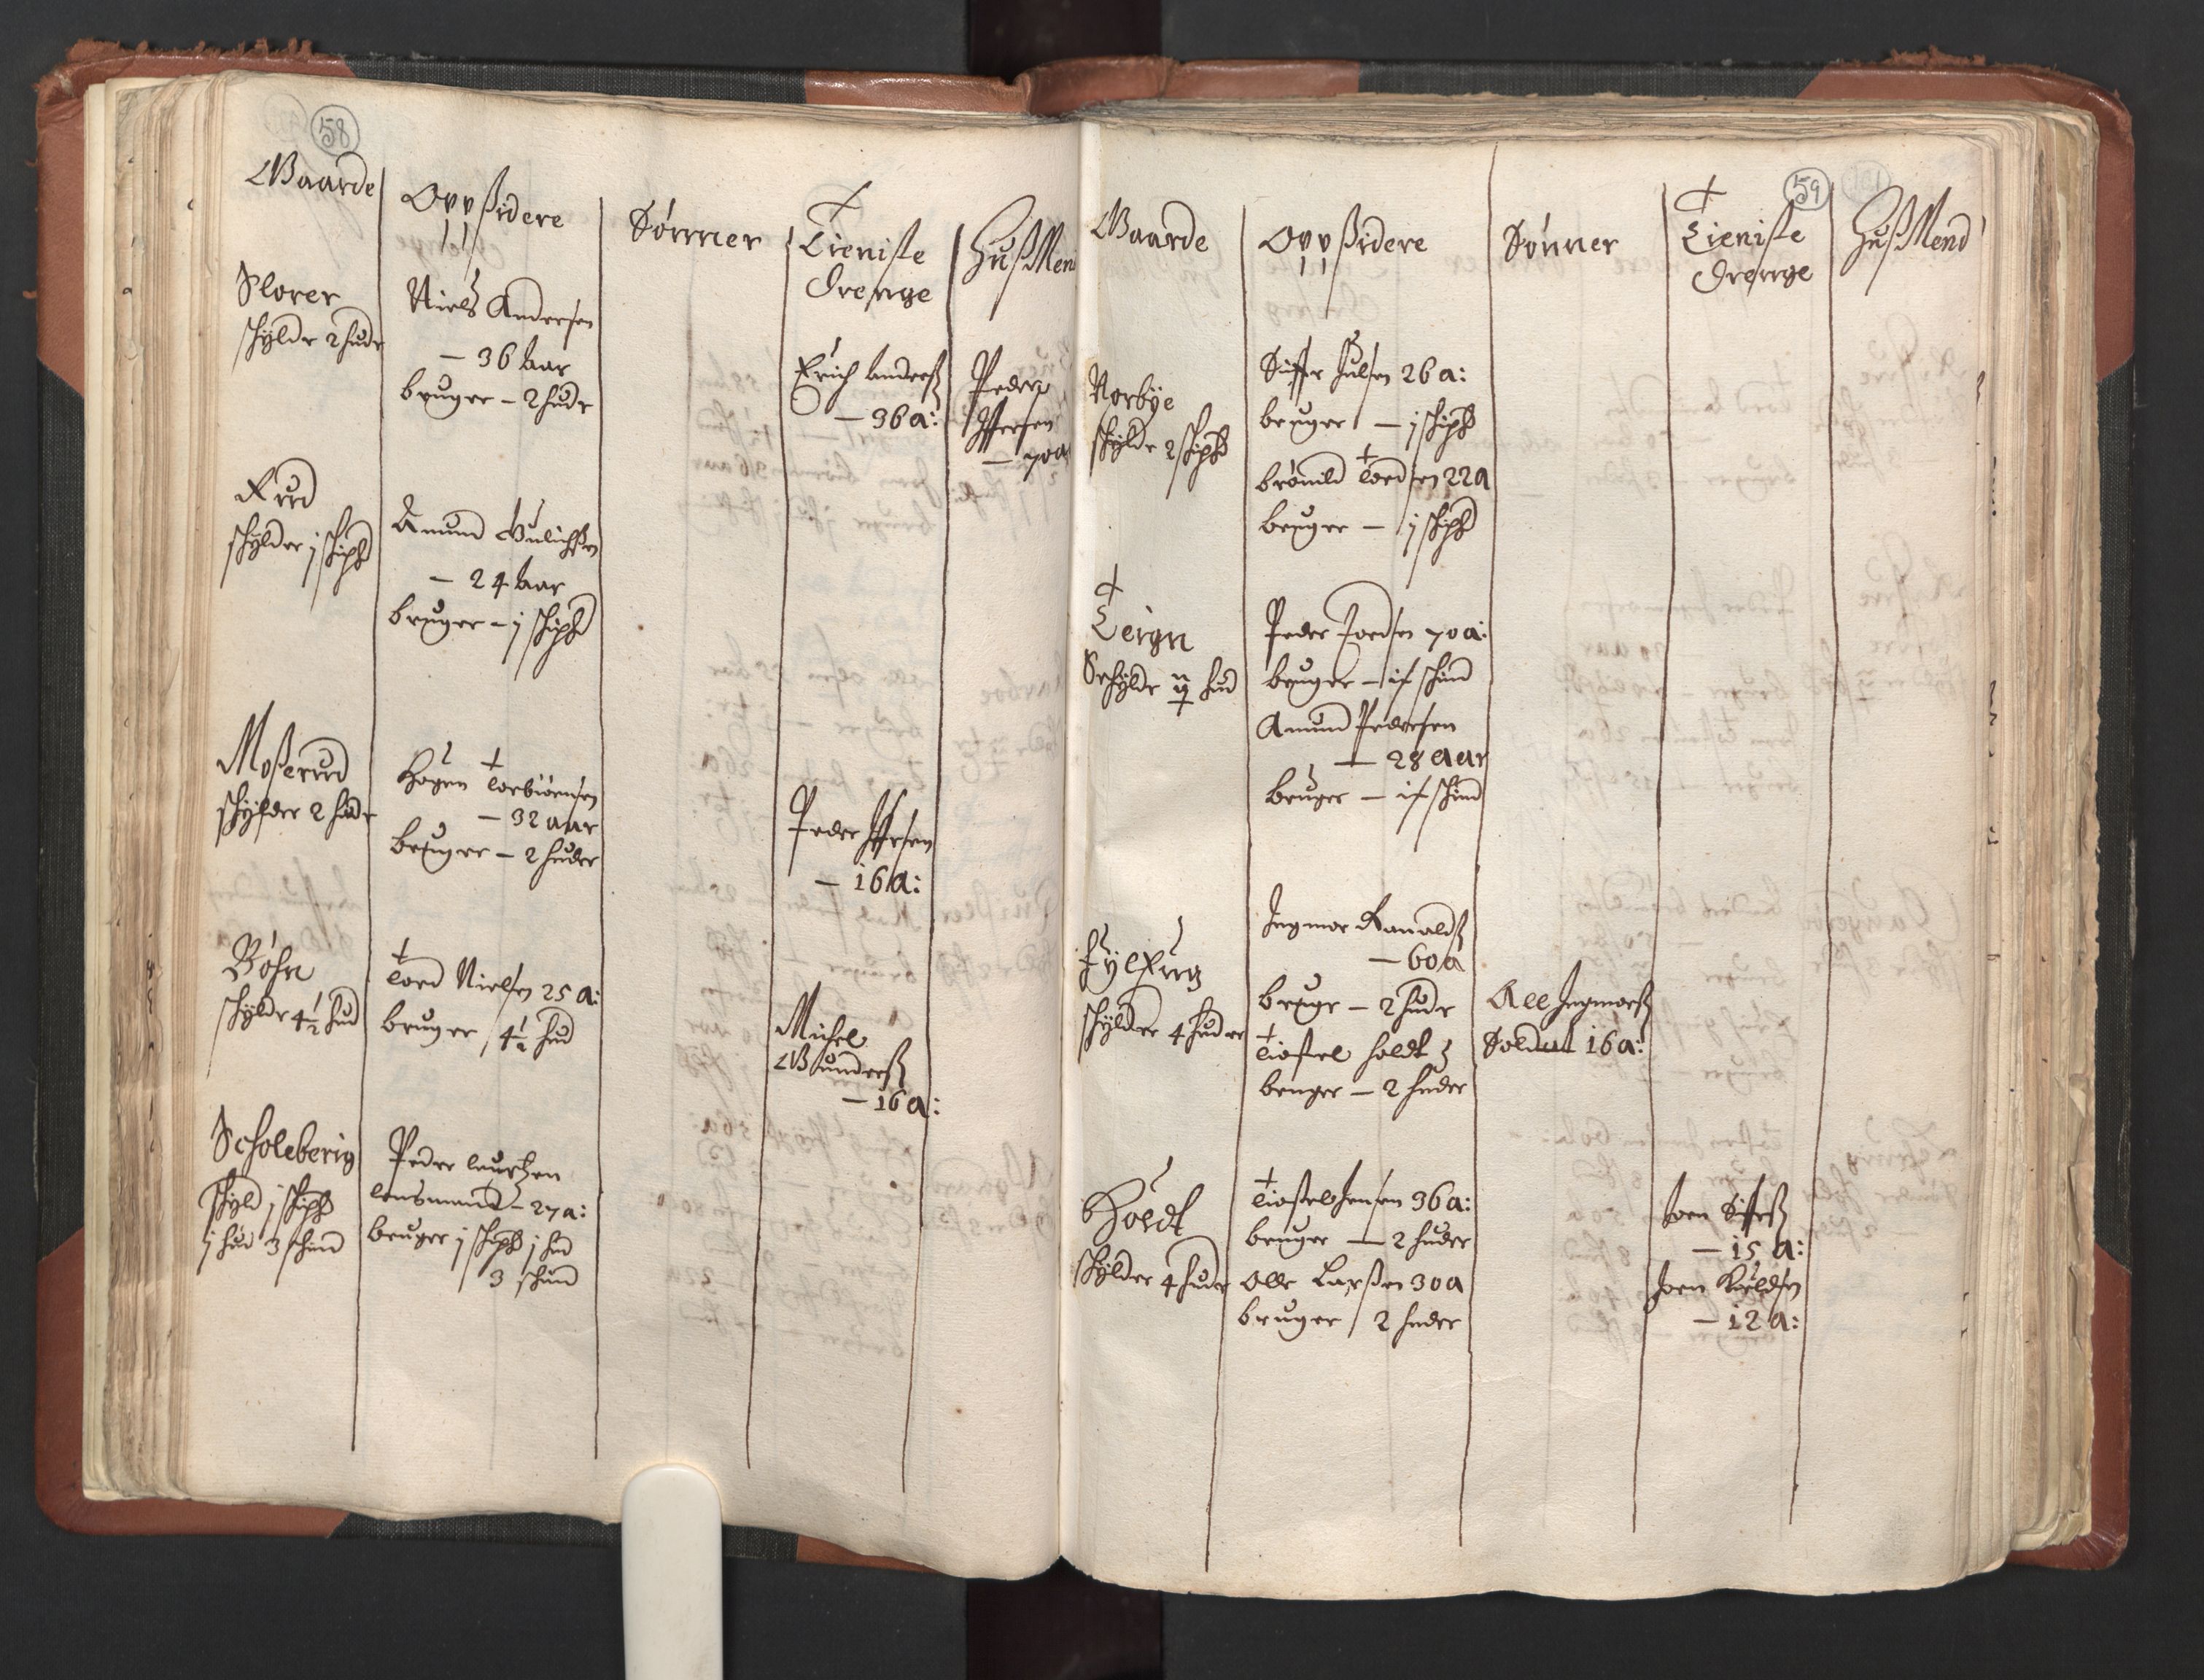 RA, Fogdenes og sorenskrivernes manntall 1664-1666, nr. 1: Fogderier (len og skipreider) i nåværende Østfold fylke, 1664, s. 58-59